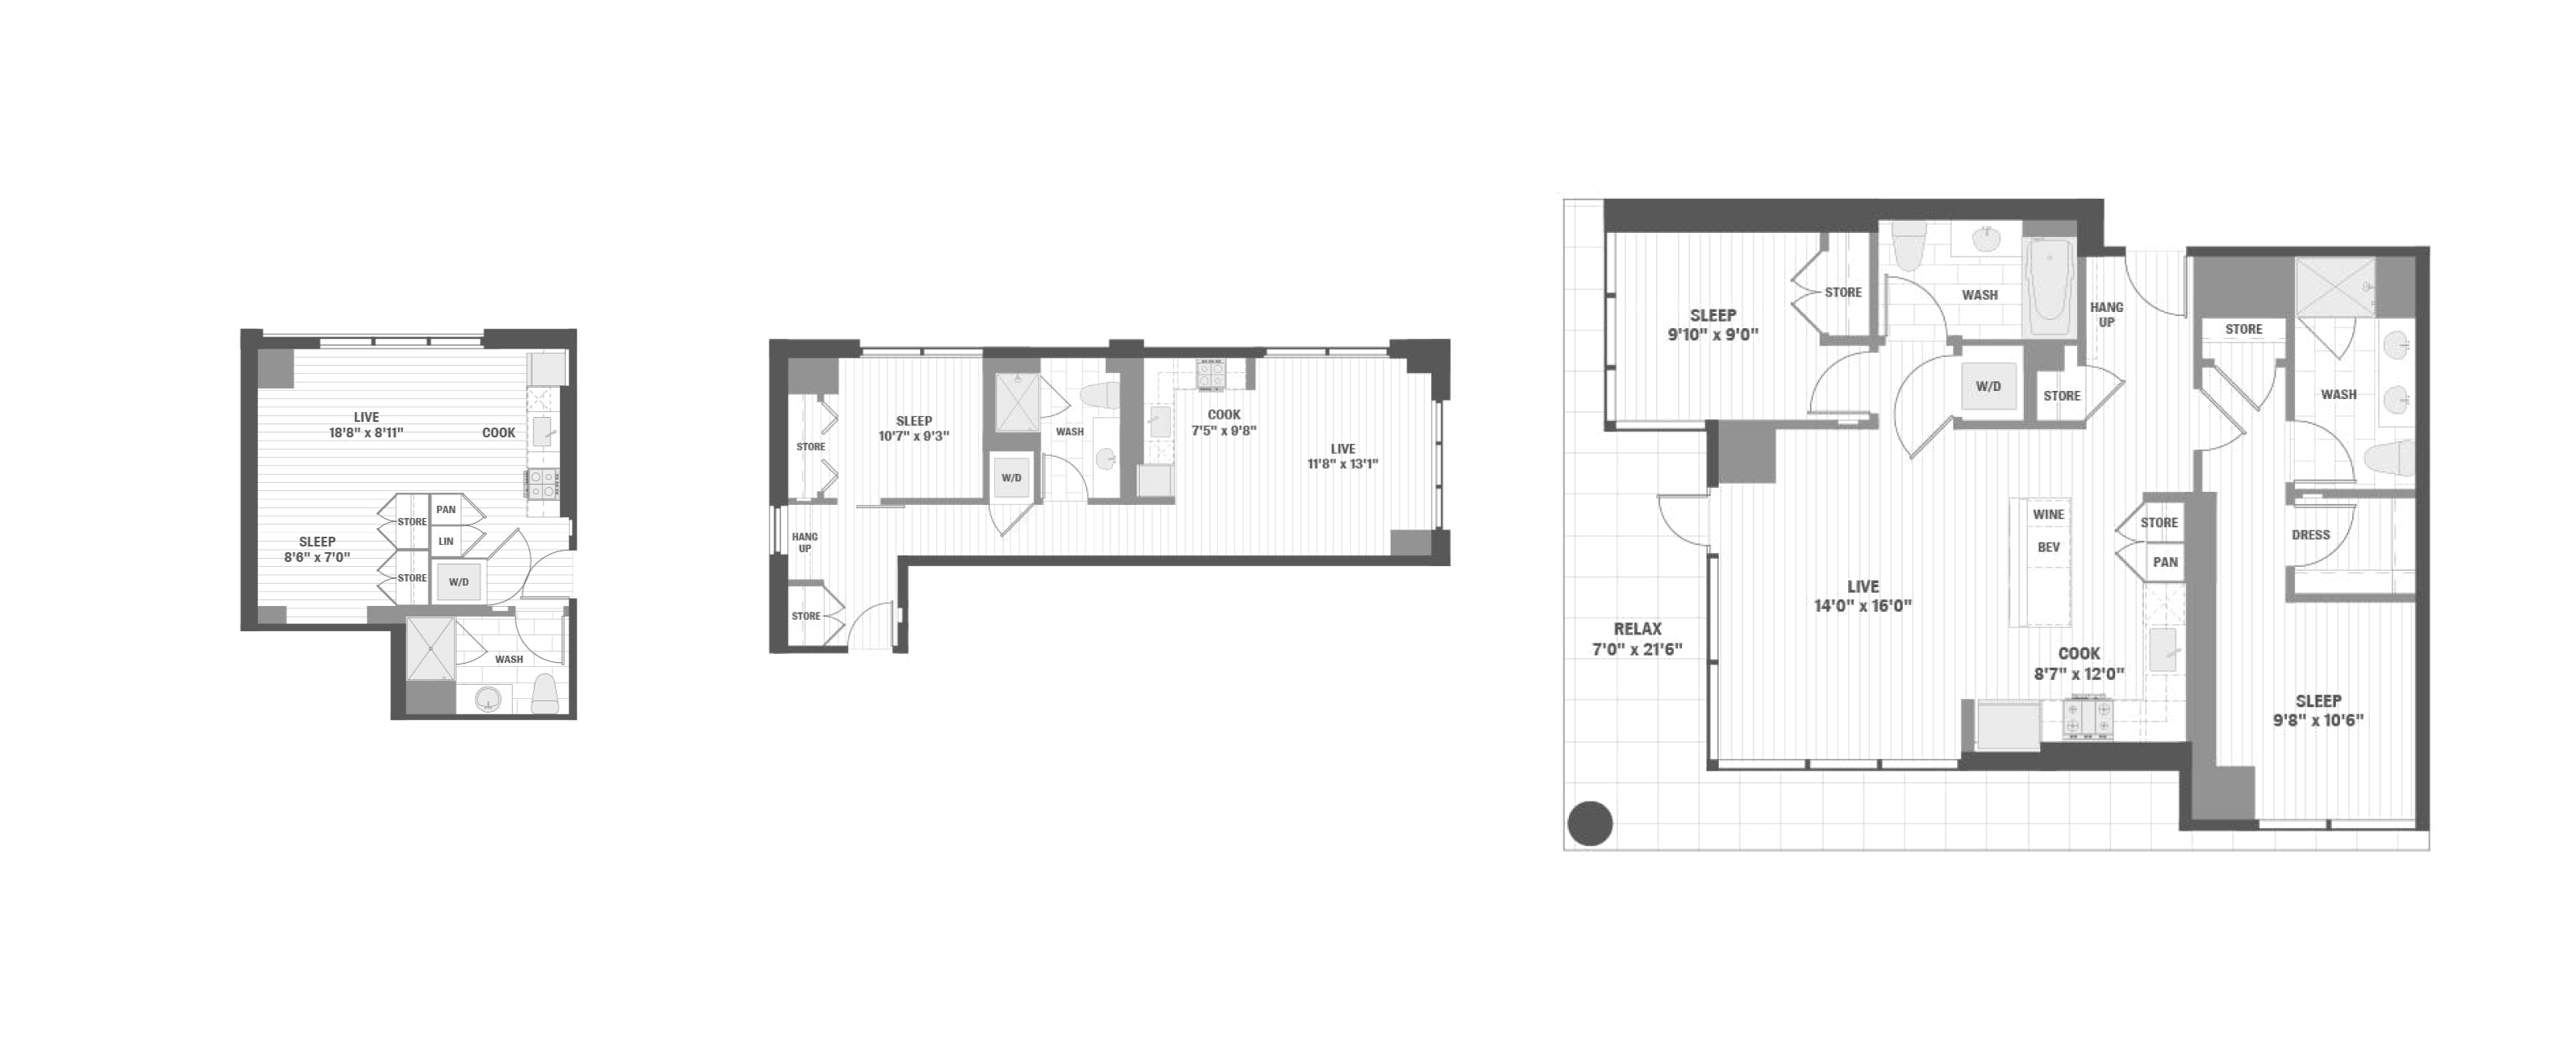 AMLI 808 studio, one, and two-bedroom floor plans